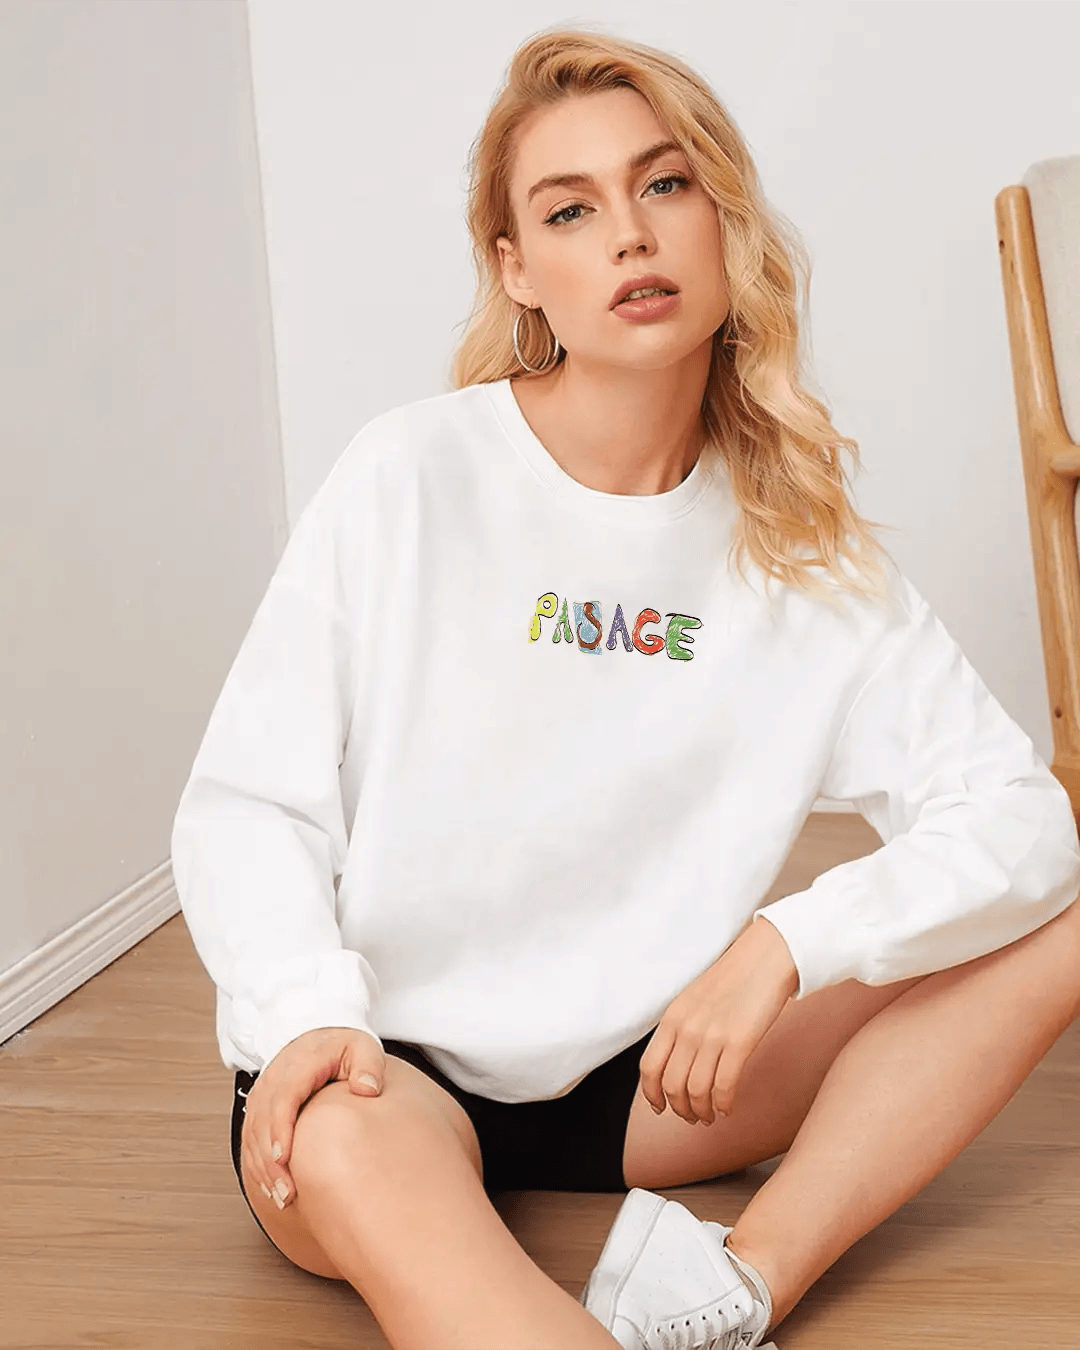 Same Old Mistakes Oversize Kadın Sweatshirt - PΛSΛGE